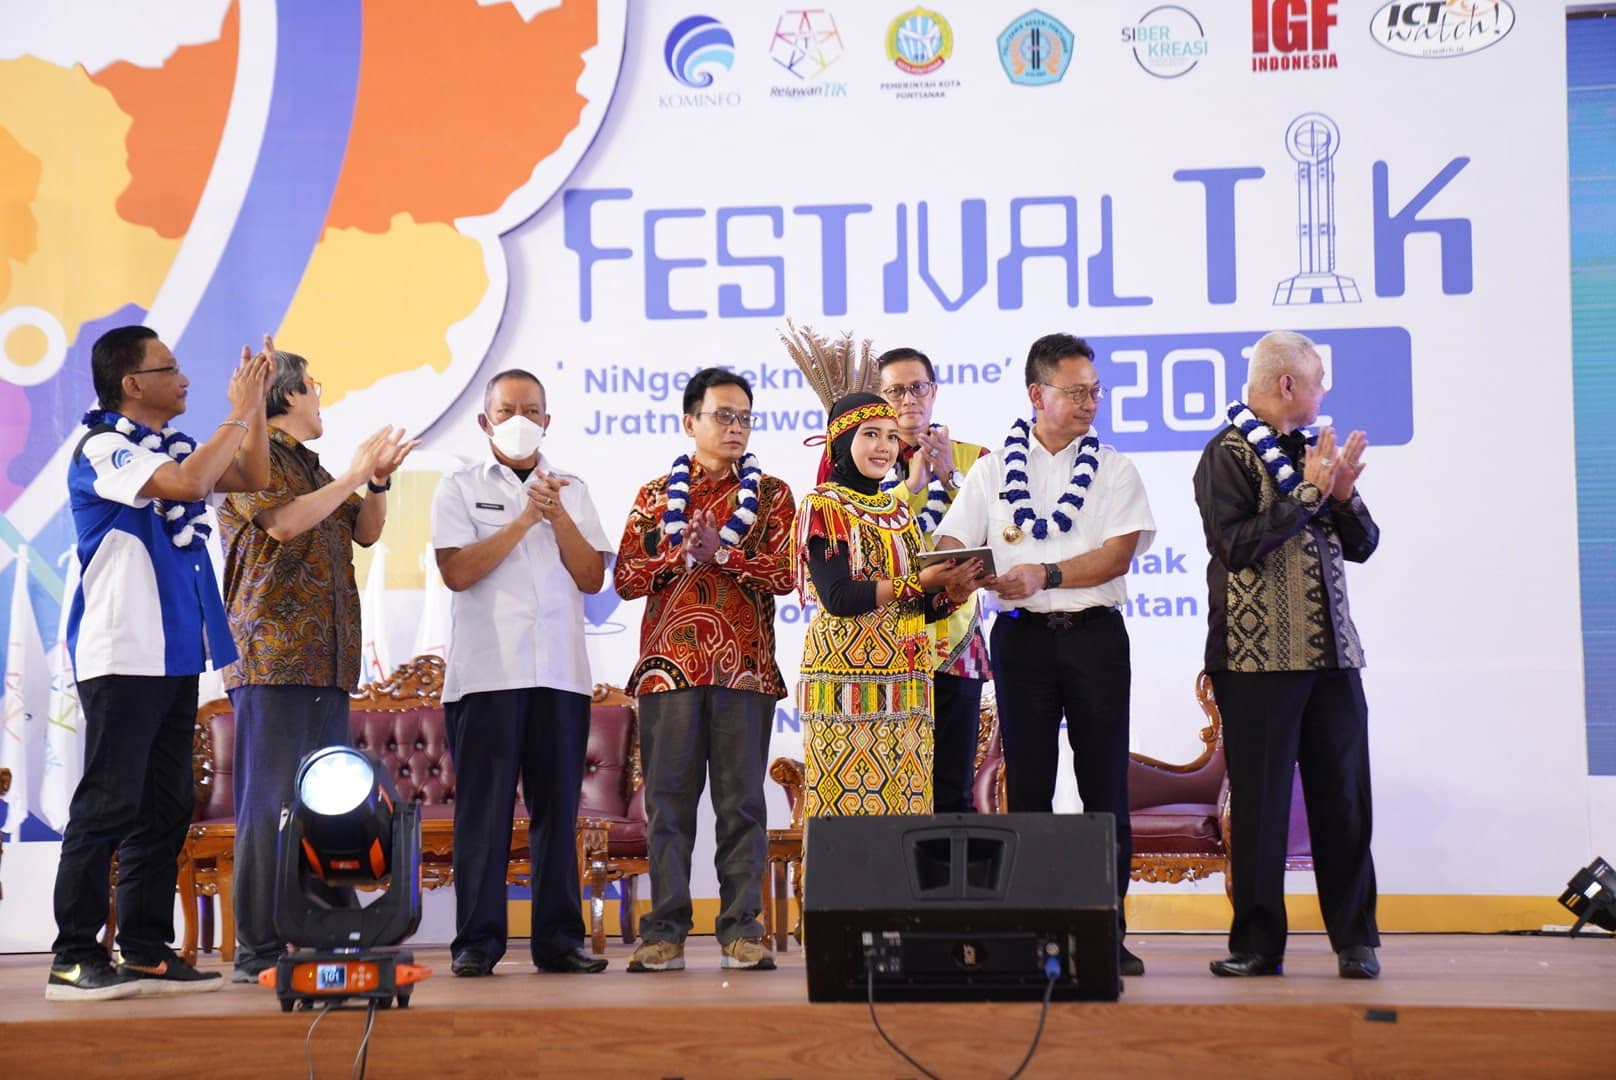 Wali Kota Pontianak, Edi Rusdi Kamtono meresmikan Festival TIK 2022. (Foto: Prokopim For KalbarOnline.com)